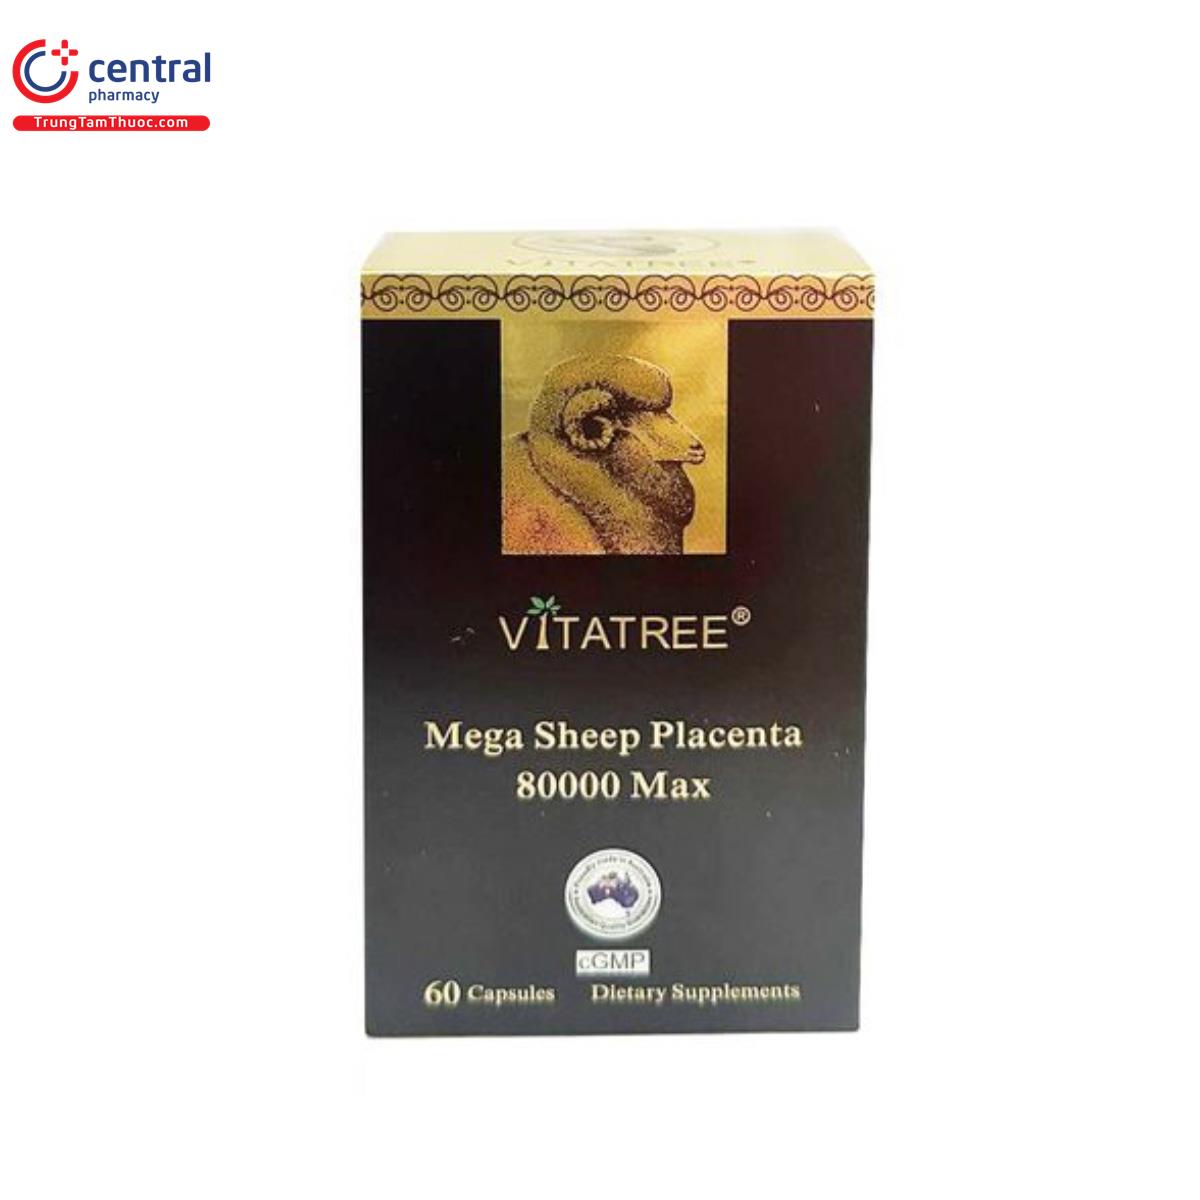 Vitatree Mega Sheep Placenta 80000 Max